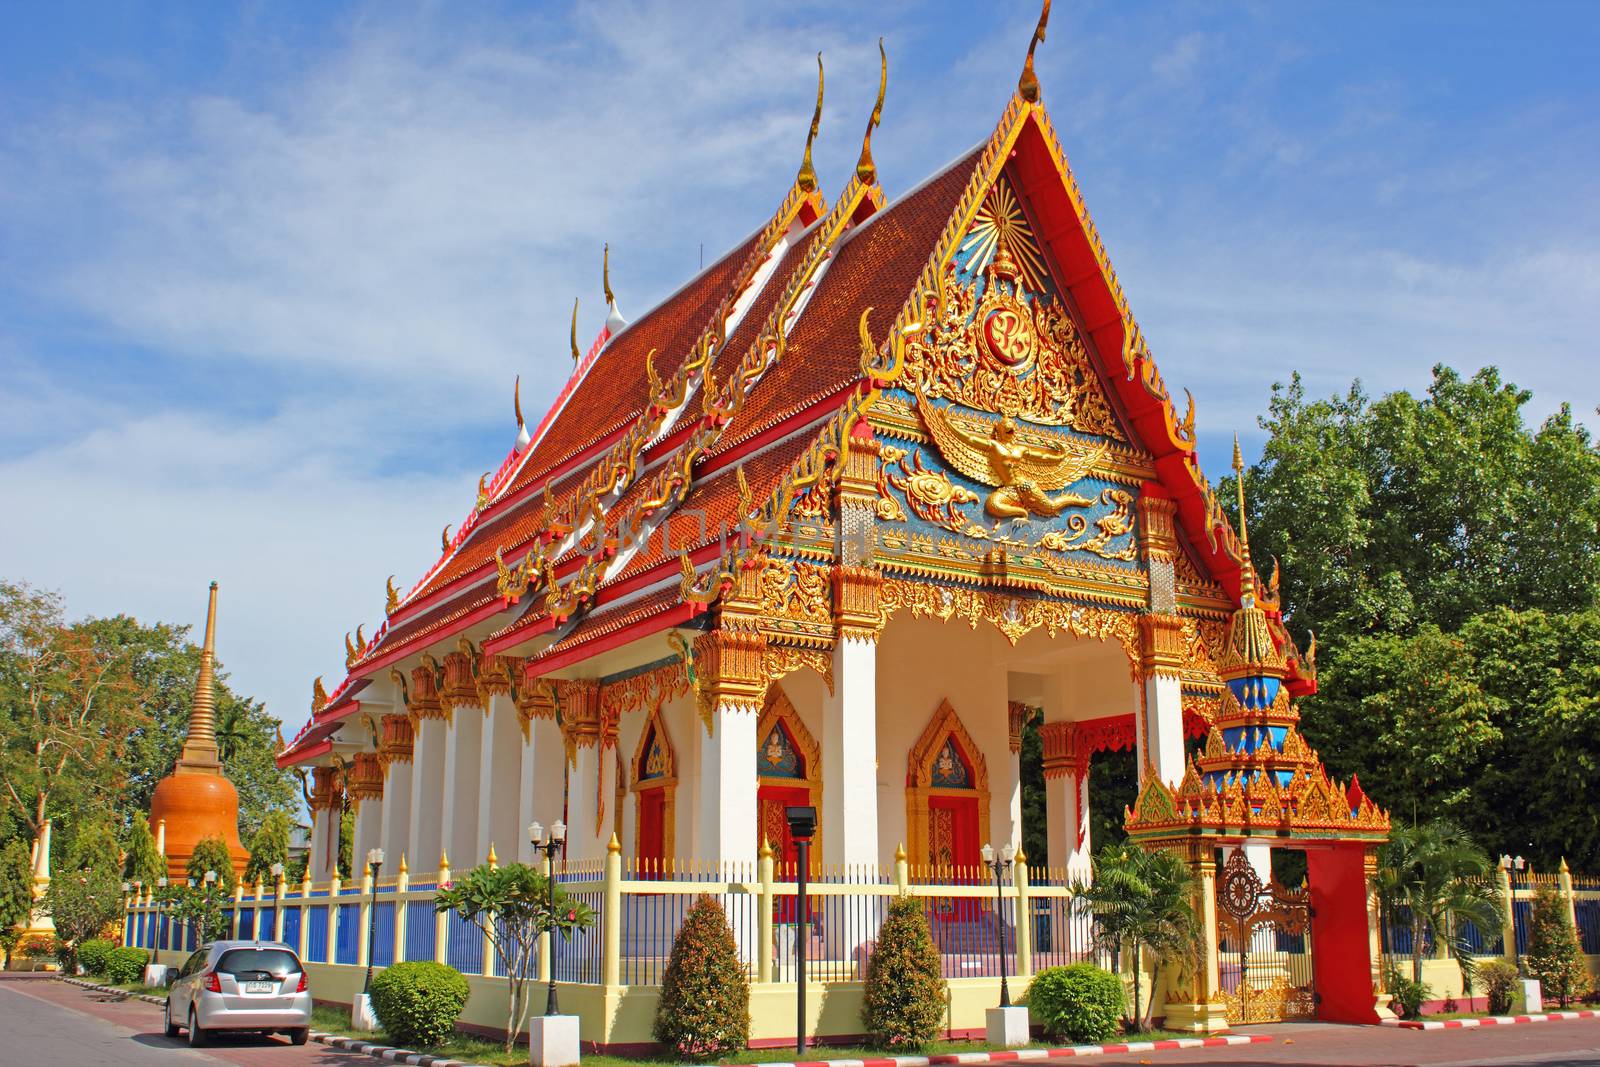 Buddha church in Phuket town. Phuket, Thailand. The name of churh is "Wat Mongkol Nimit".